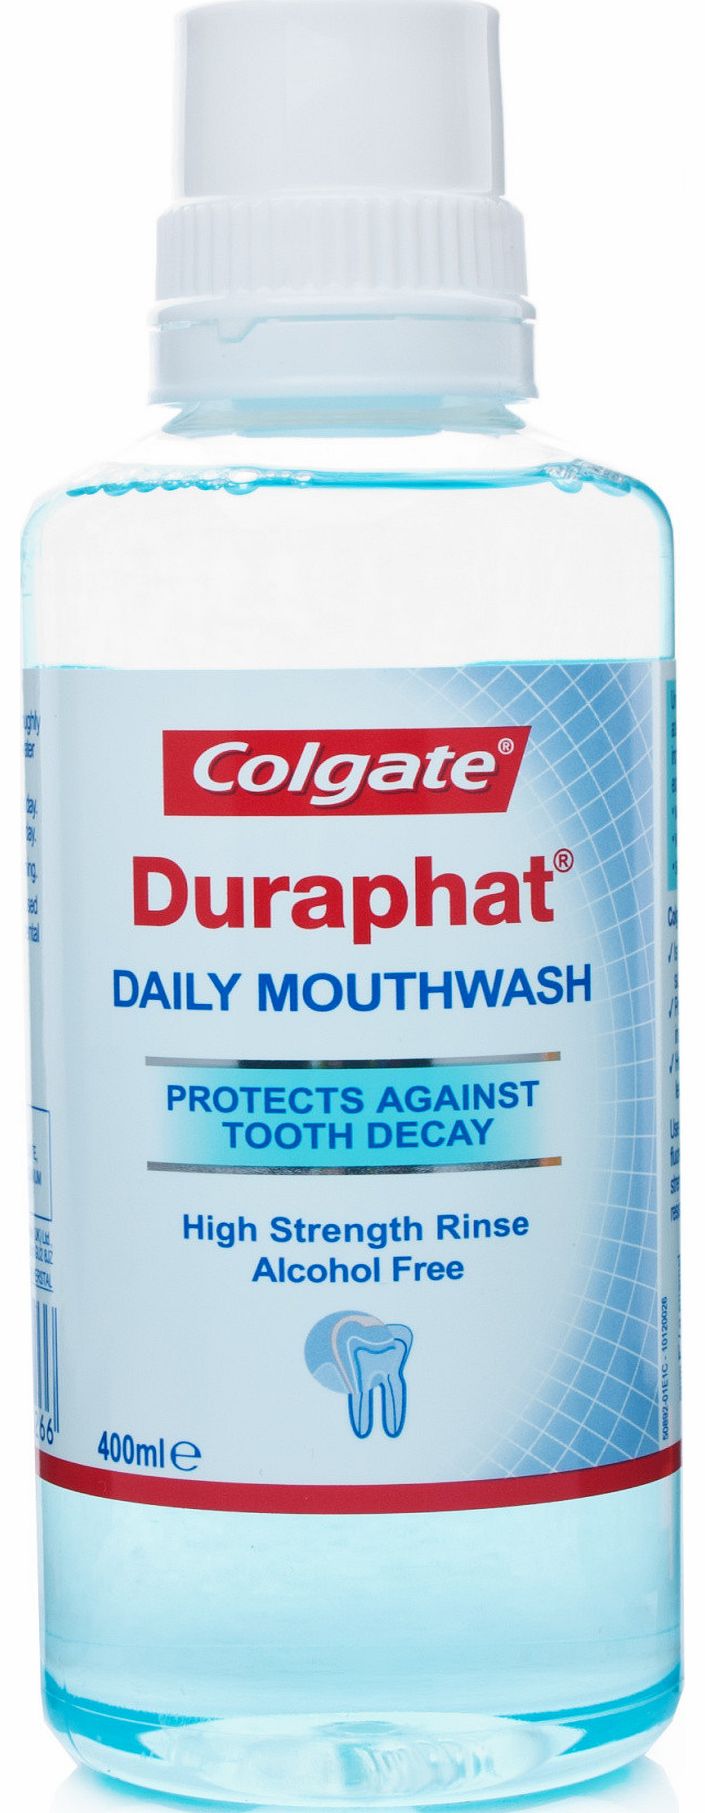 Colgate Duraphat Daily Mouthwash